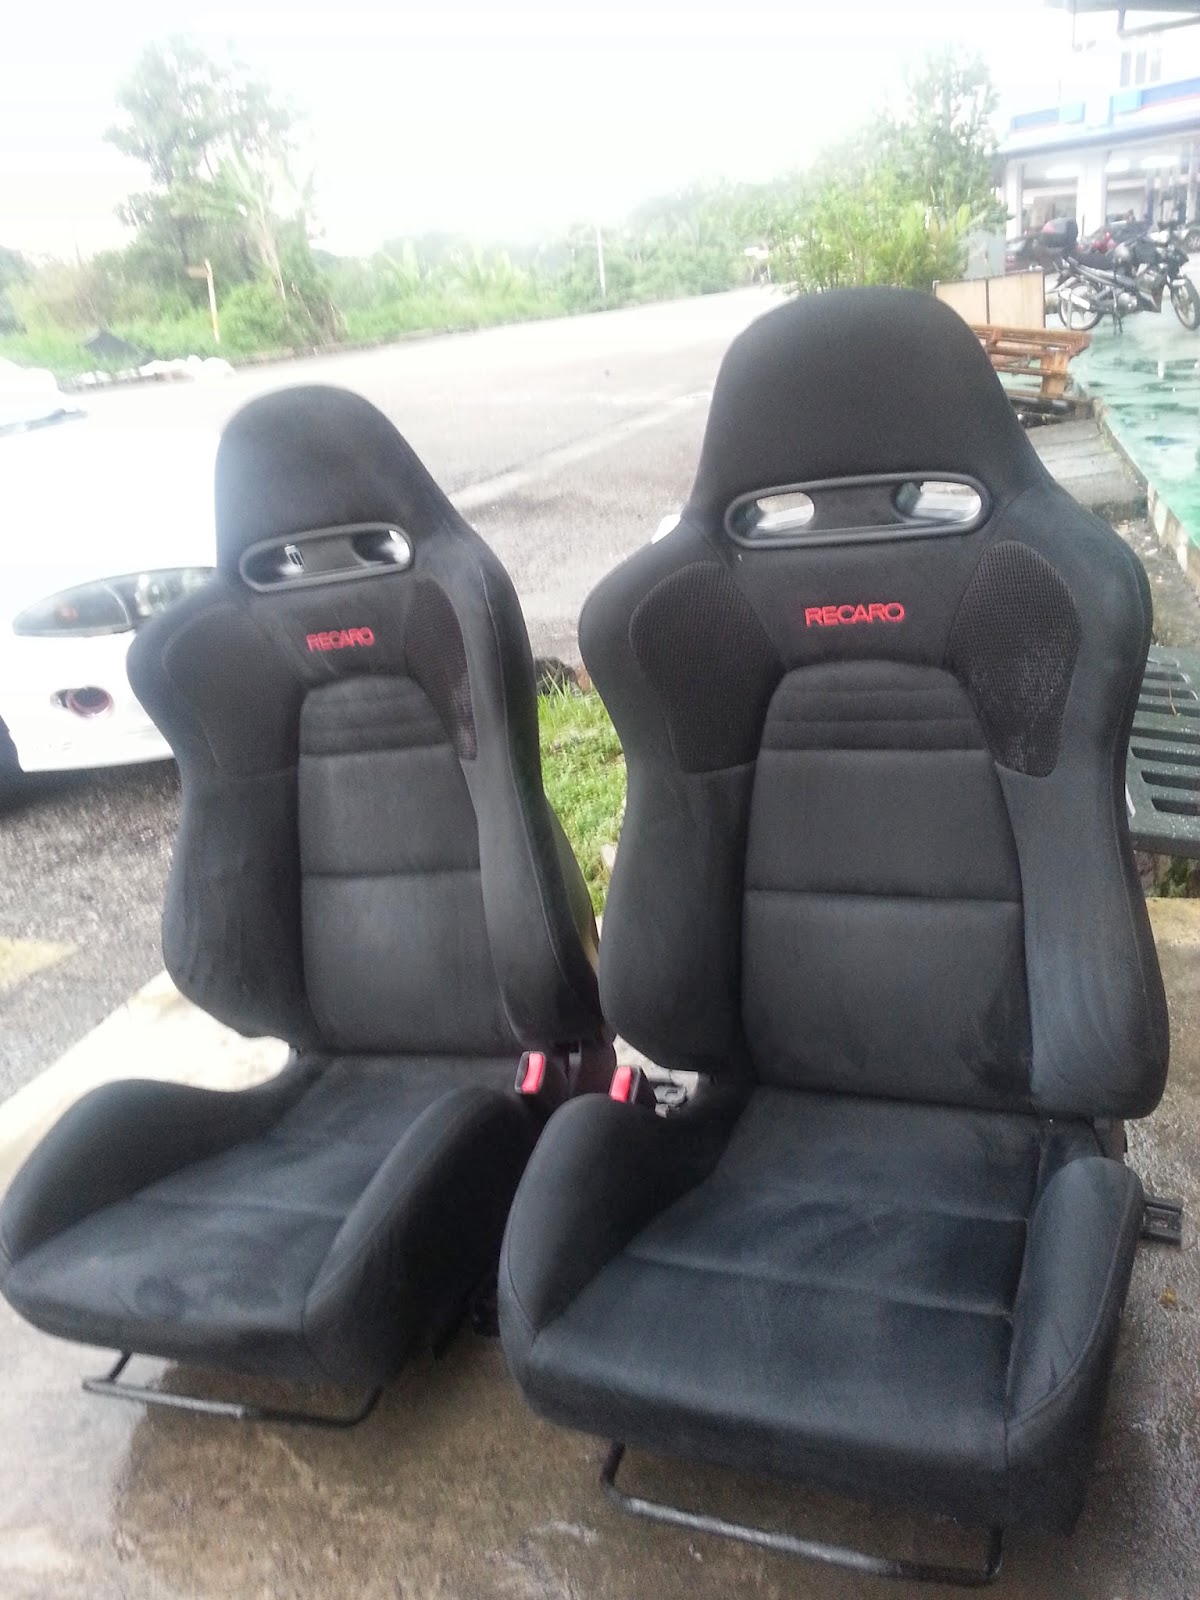 Dingz Garage: Seat Recaro Lancer Evo 9 MR complete